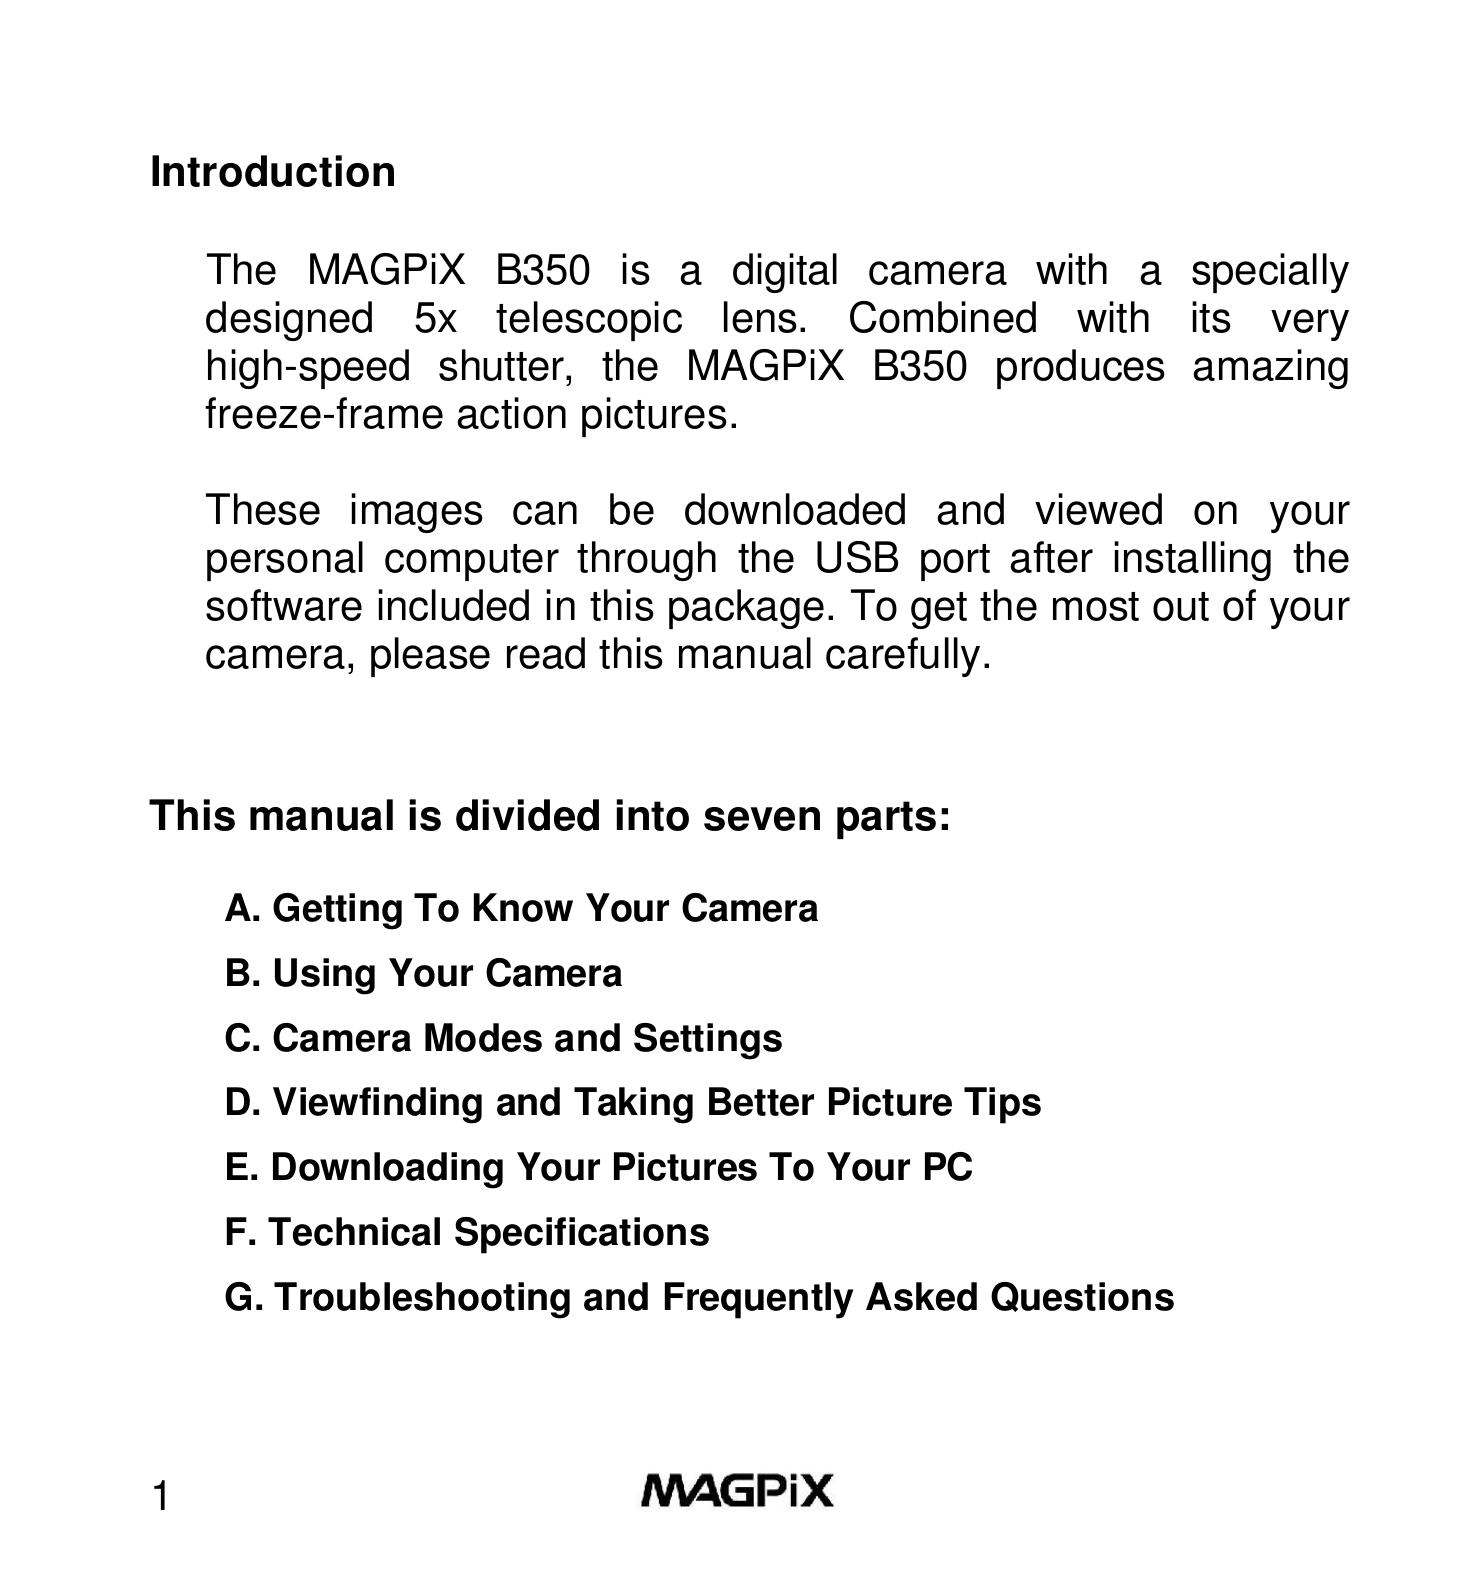 MAGPiX B350 Digital Camera User Manual